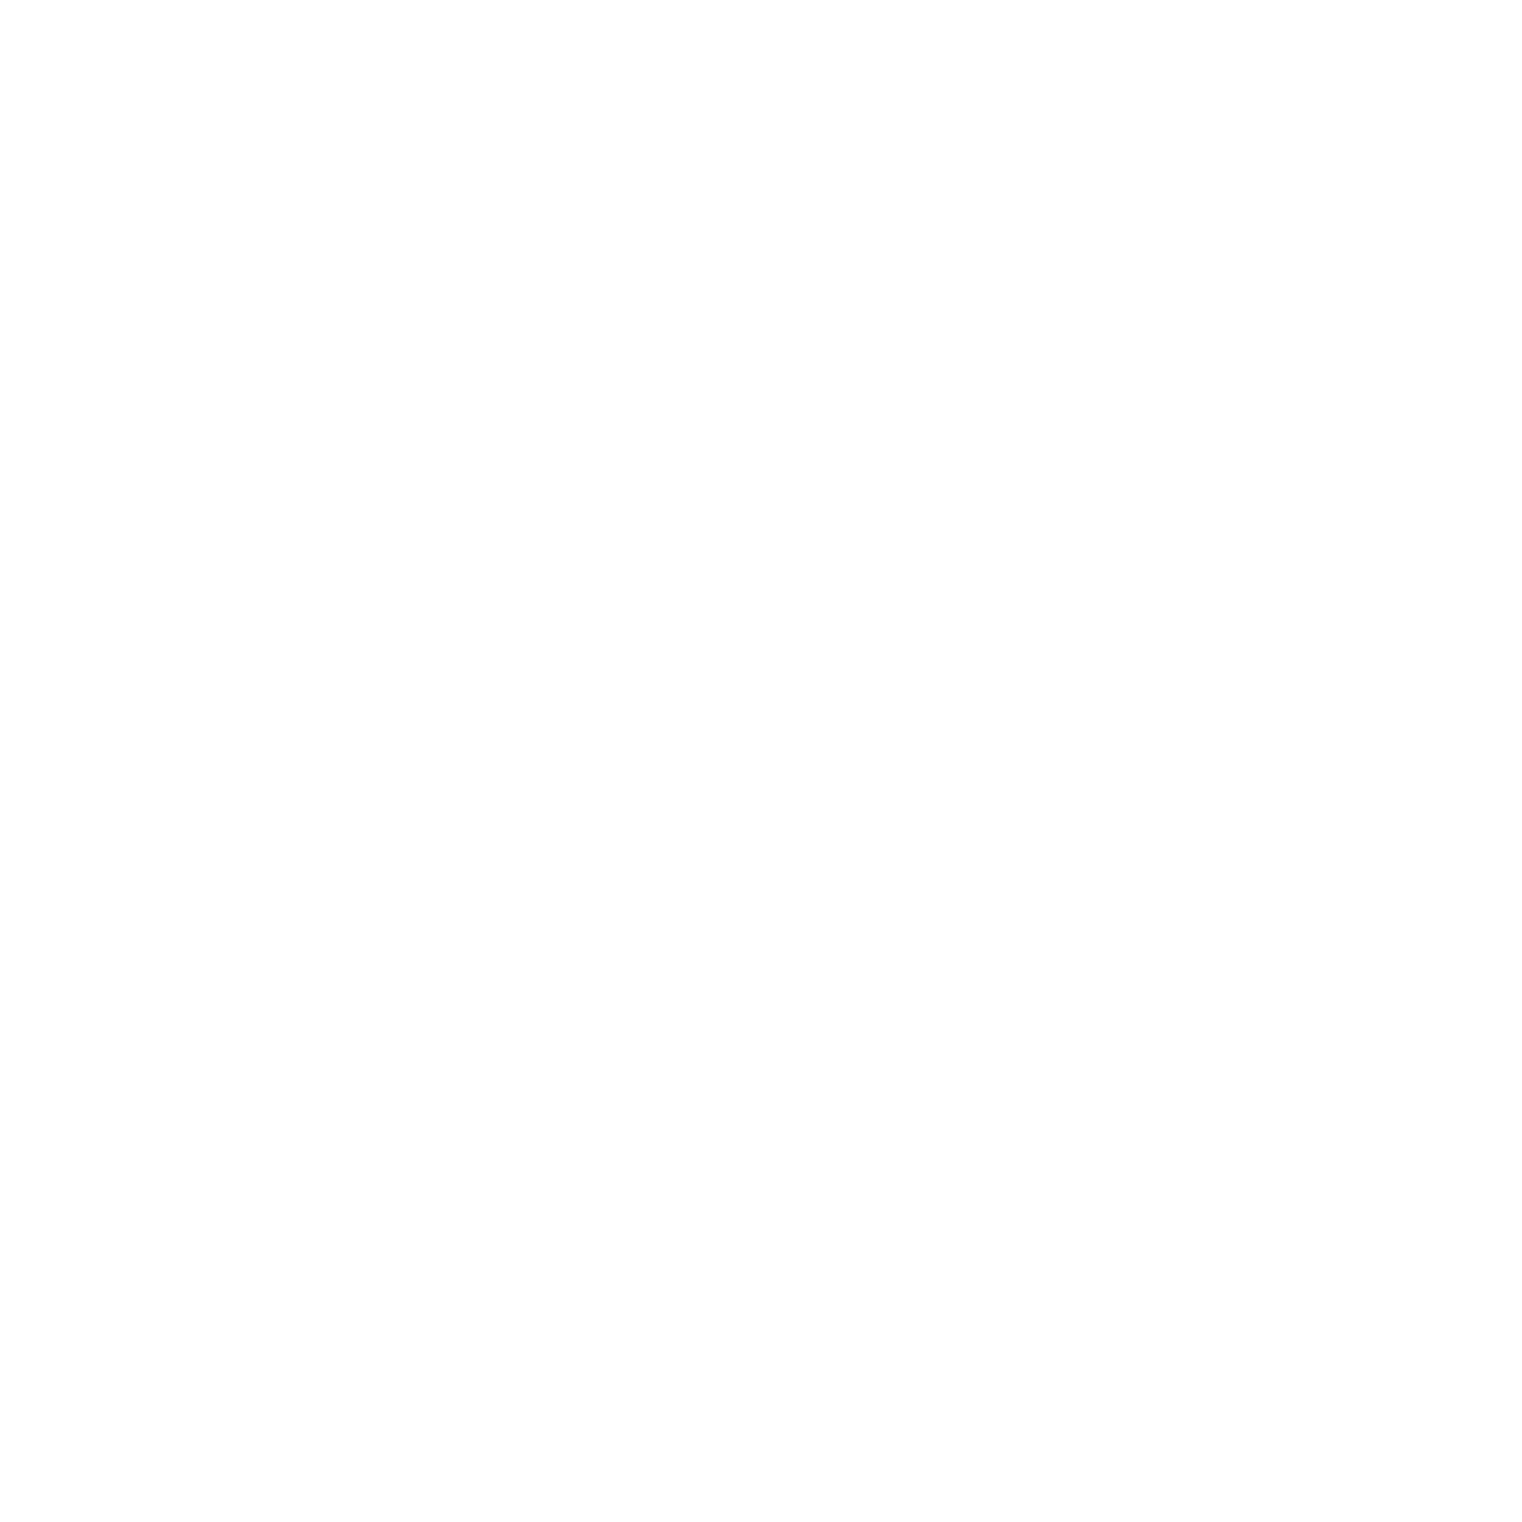 Laboratorios Farmaceuticos Rovi logo pour fonds sombres (PNG transparent)